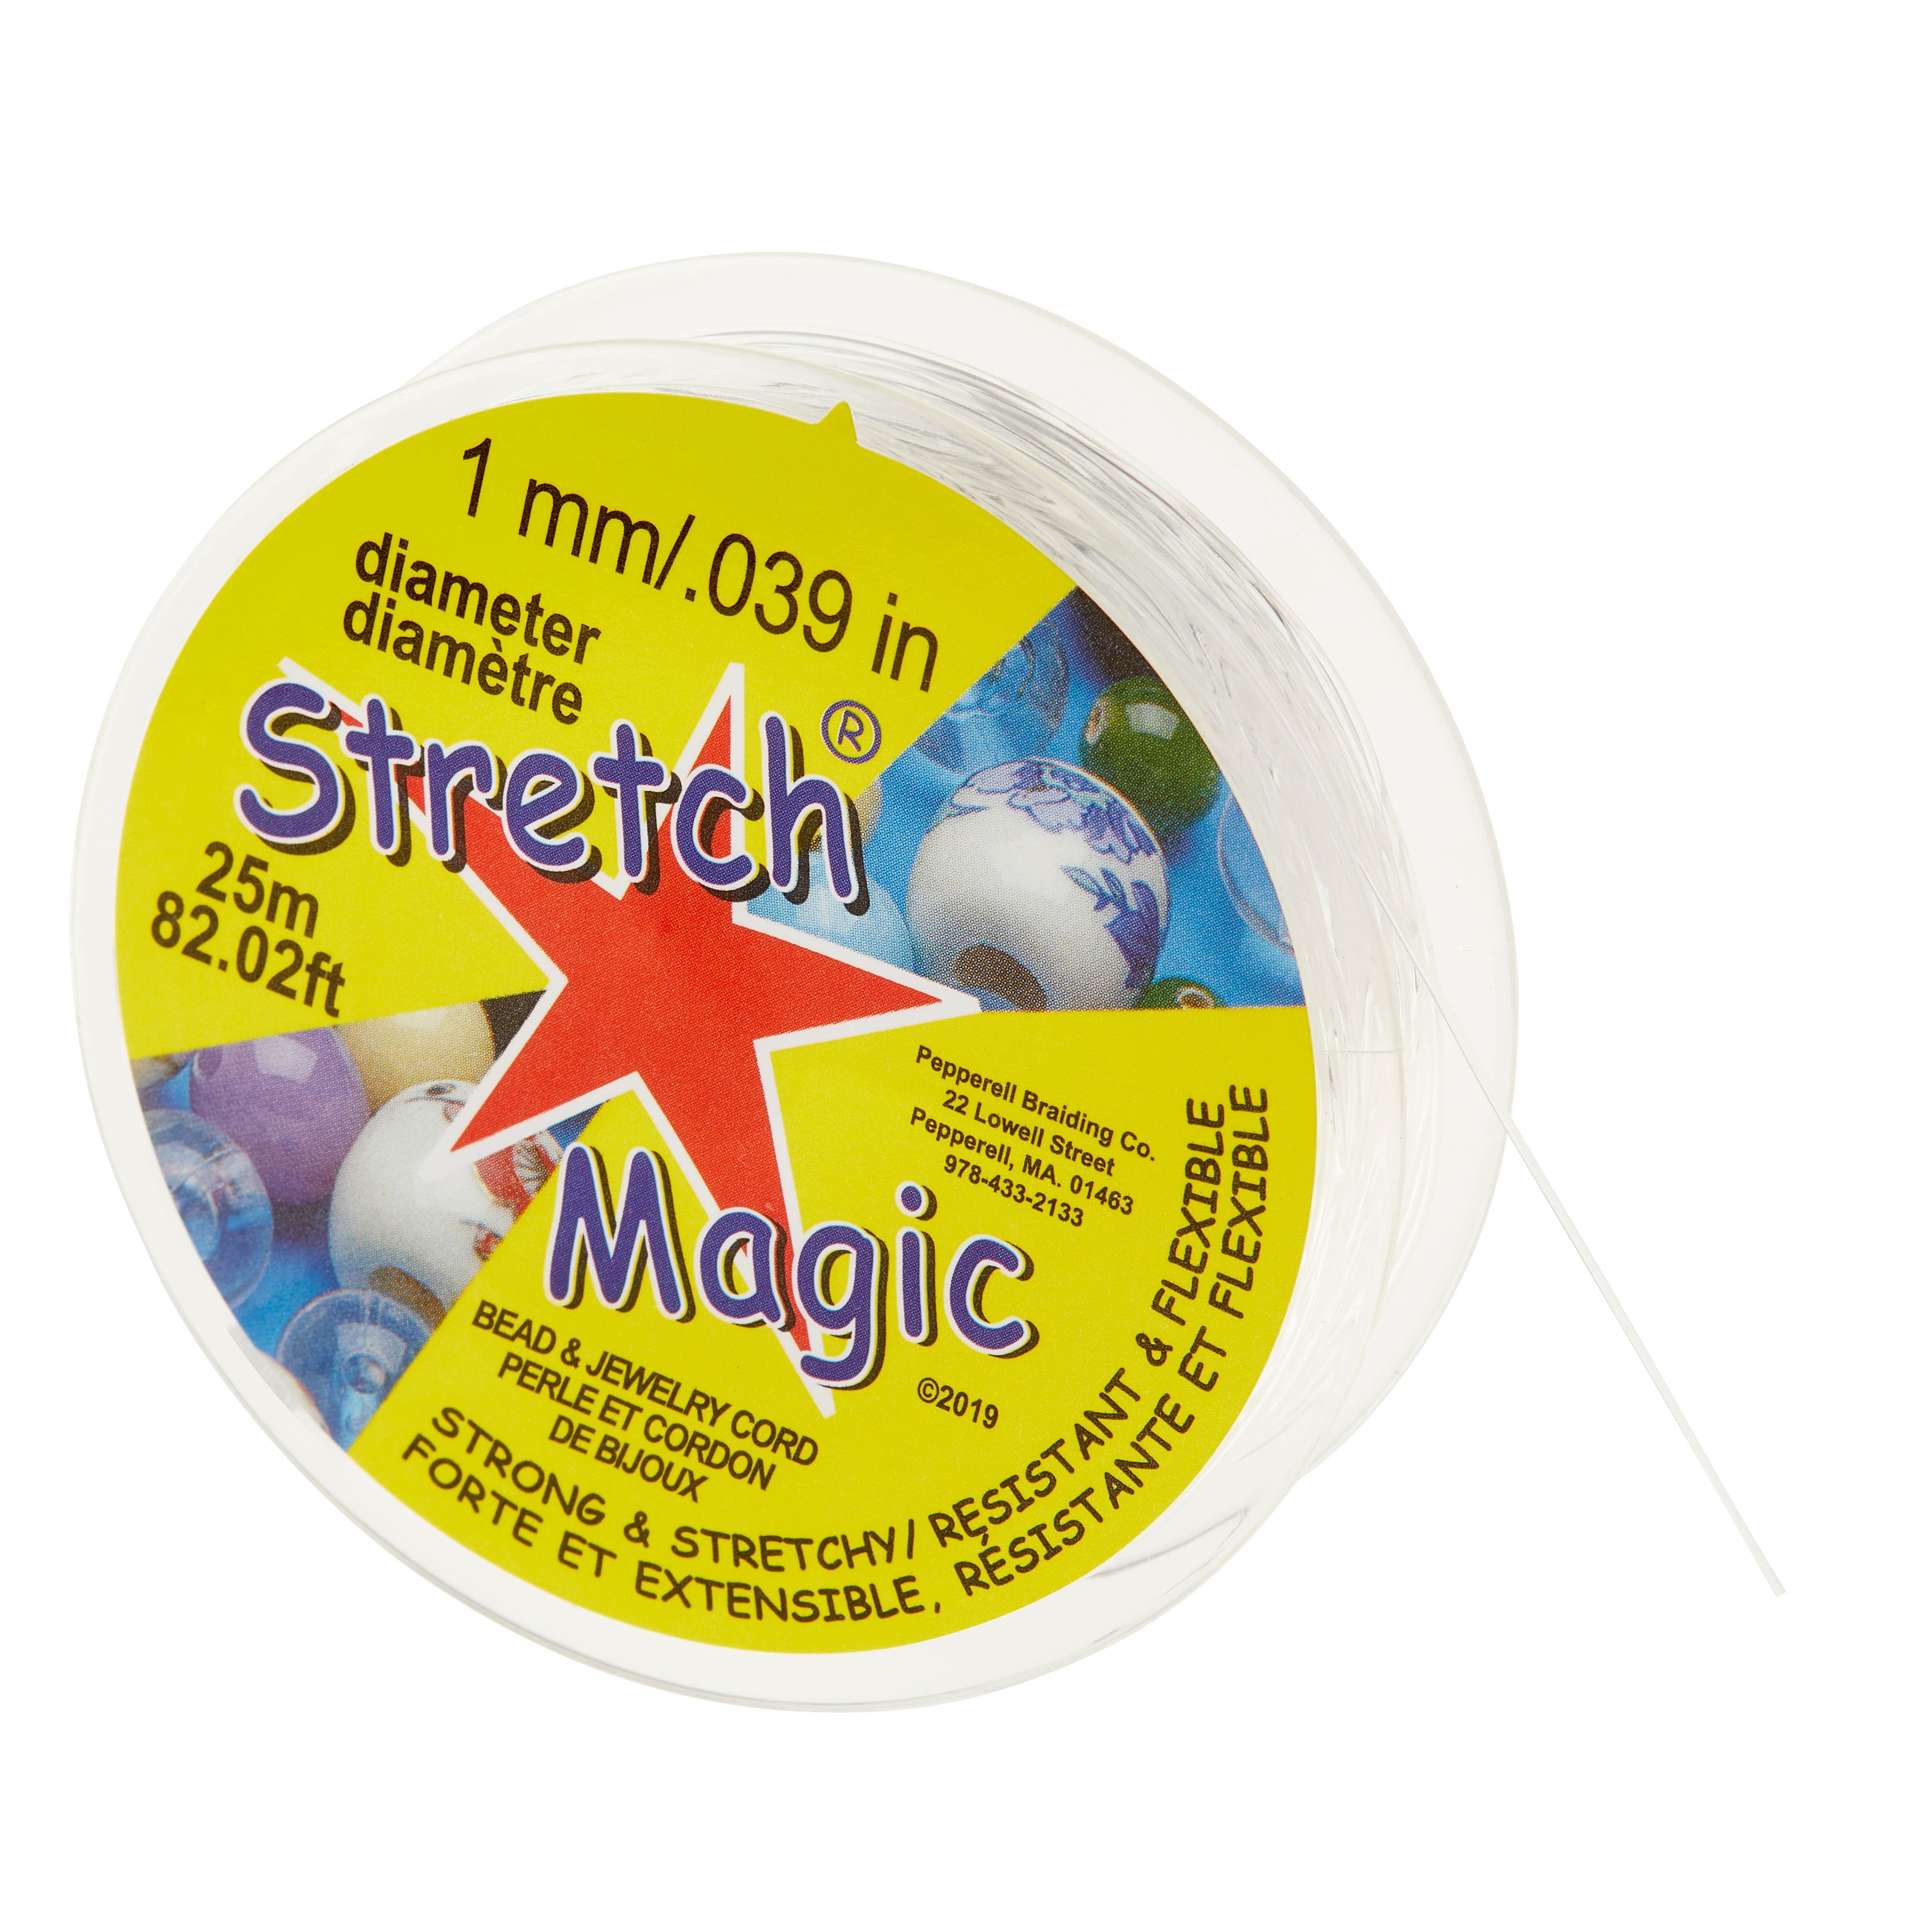 Stretch Magic&#xAE; Clear Bead &#x26; Jewelry Cord, 1mm